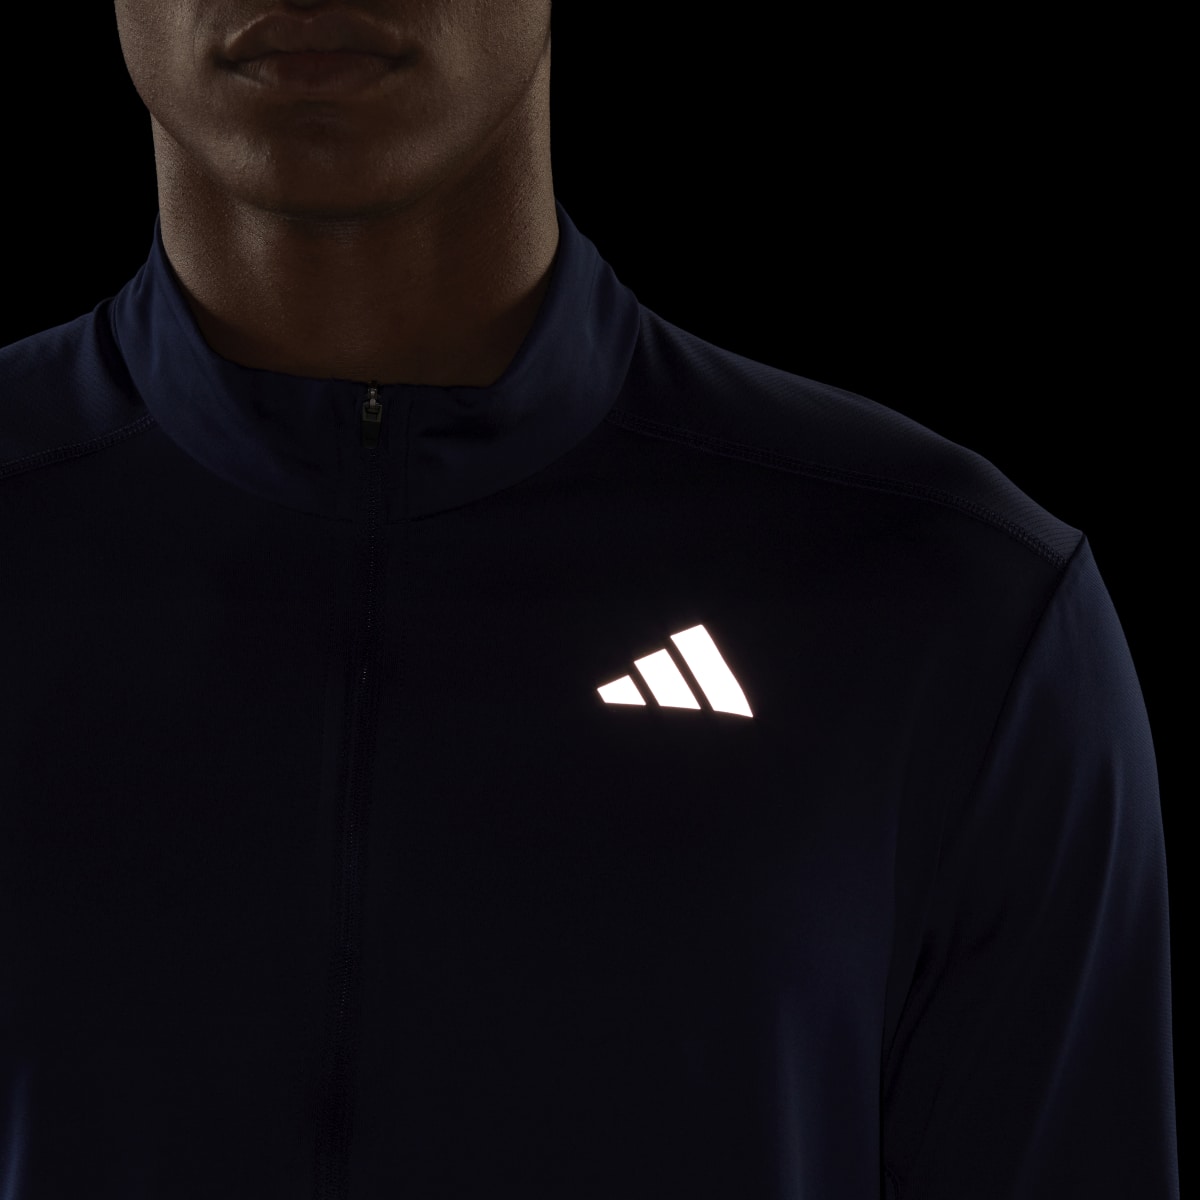 Adidas Own the Run 1/2 Zip Long-Sleeve Top. 7